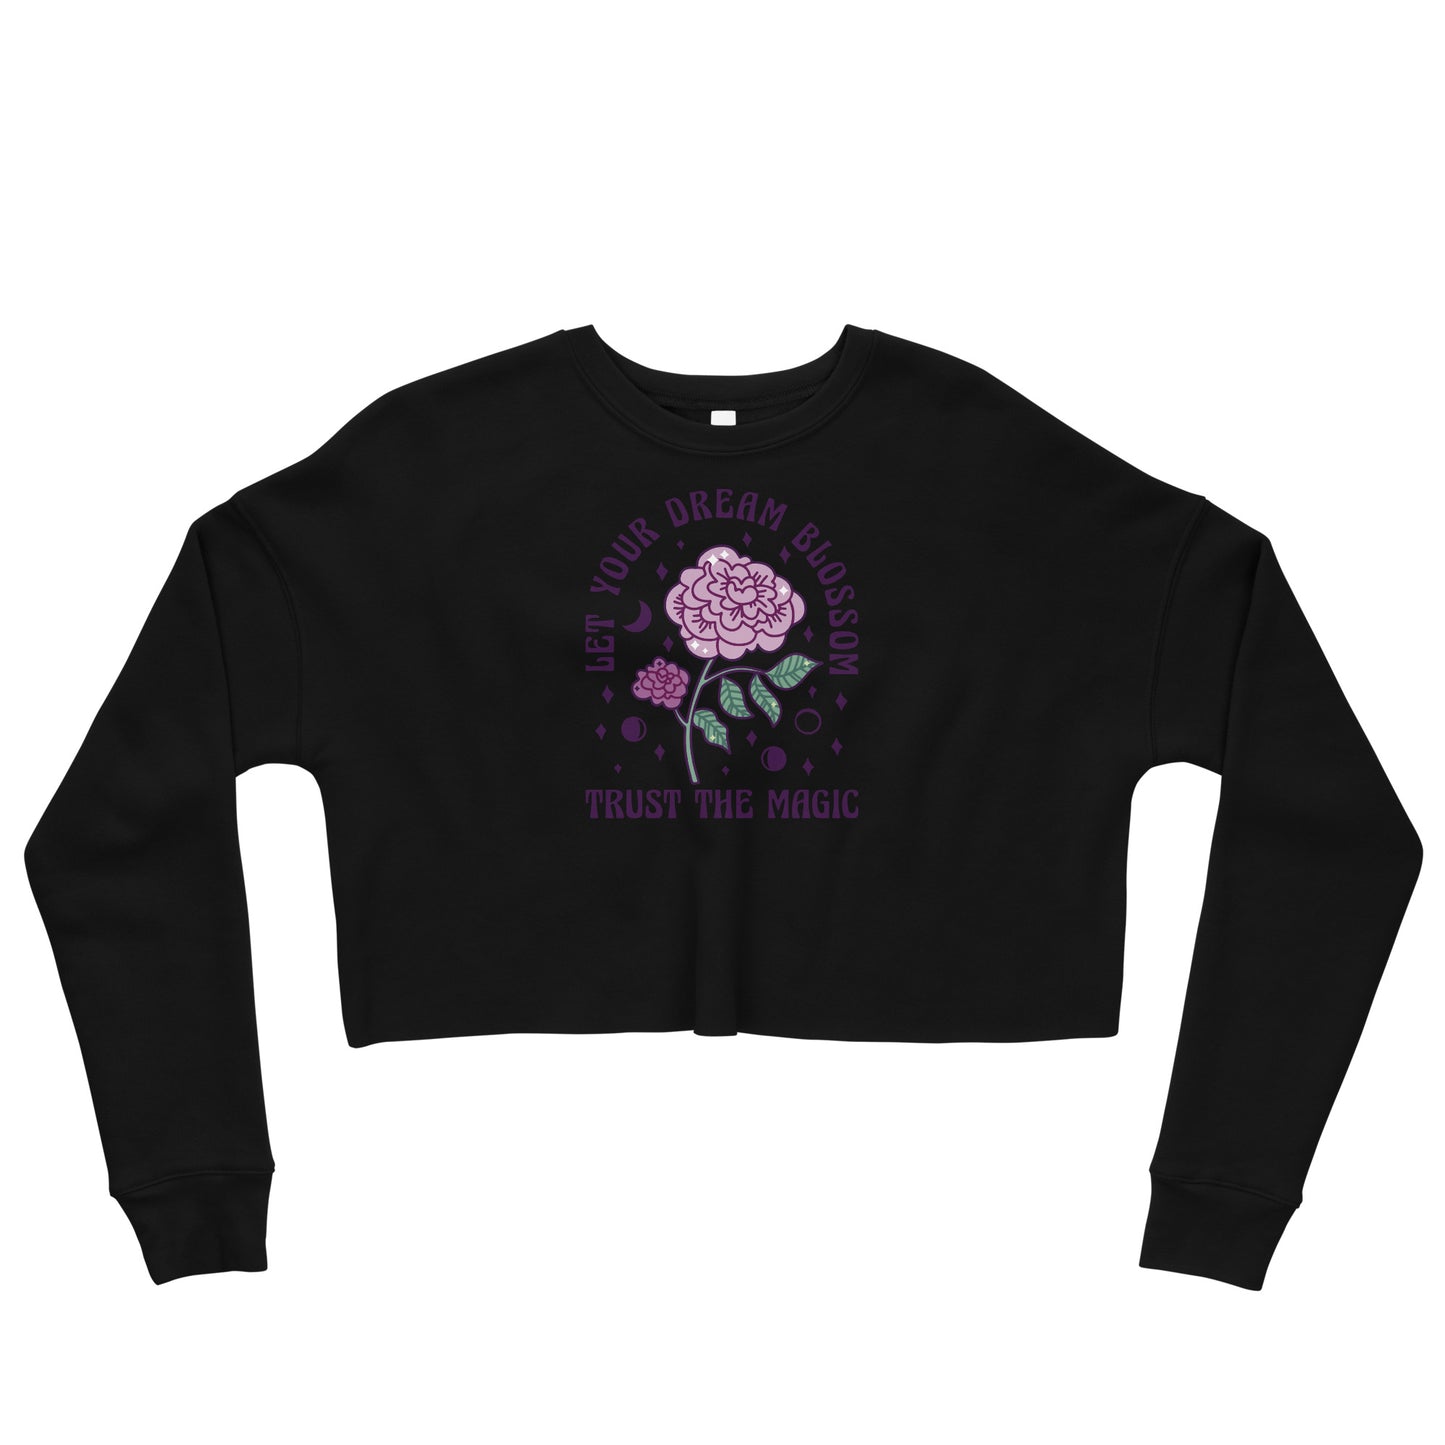 Crop Sweatshirt Womens (Let Your Dream Blossom. Trust The Magic - Inspiration 009)